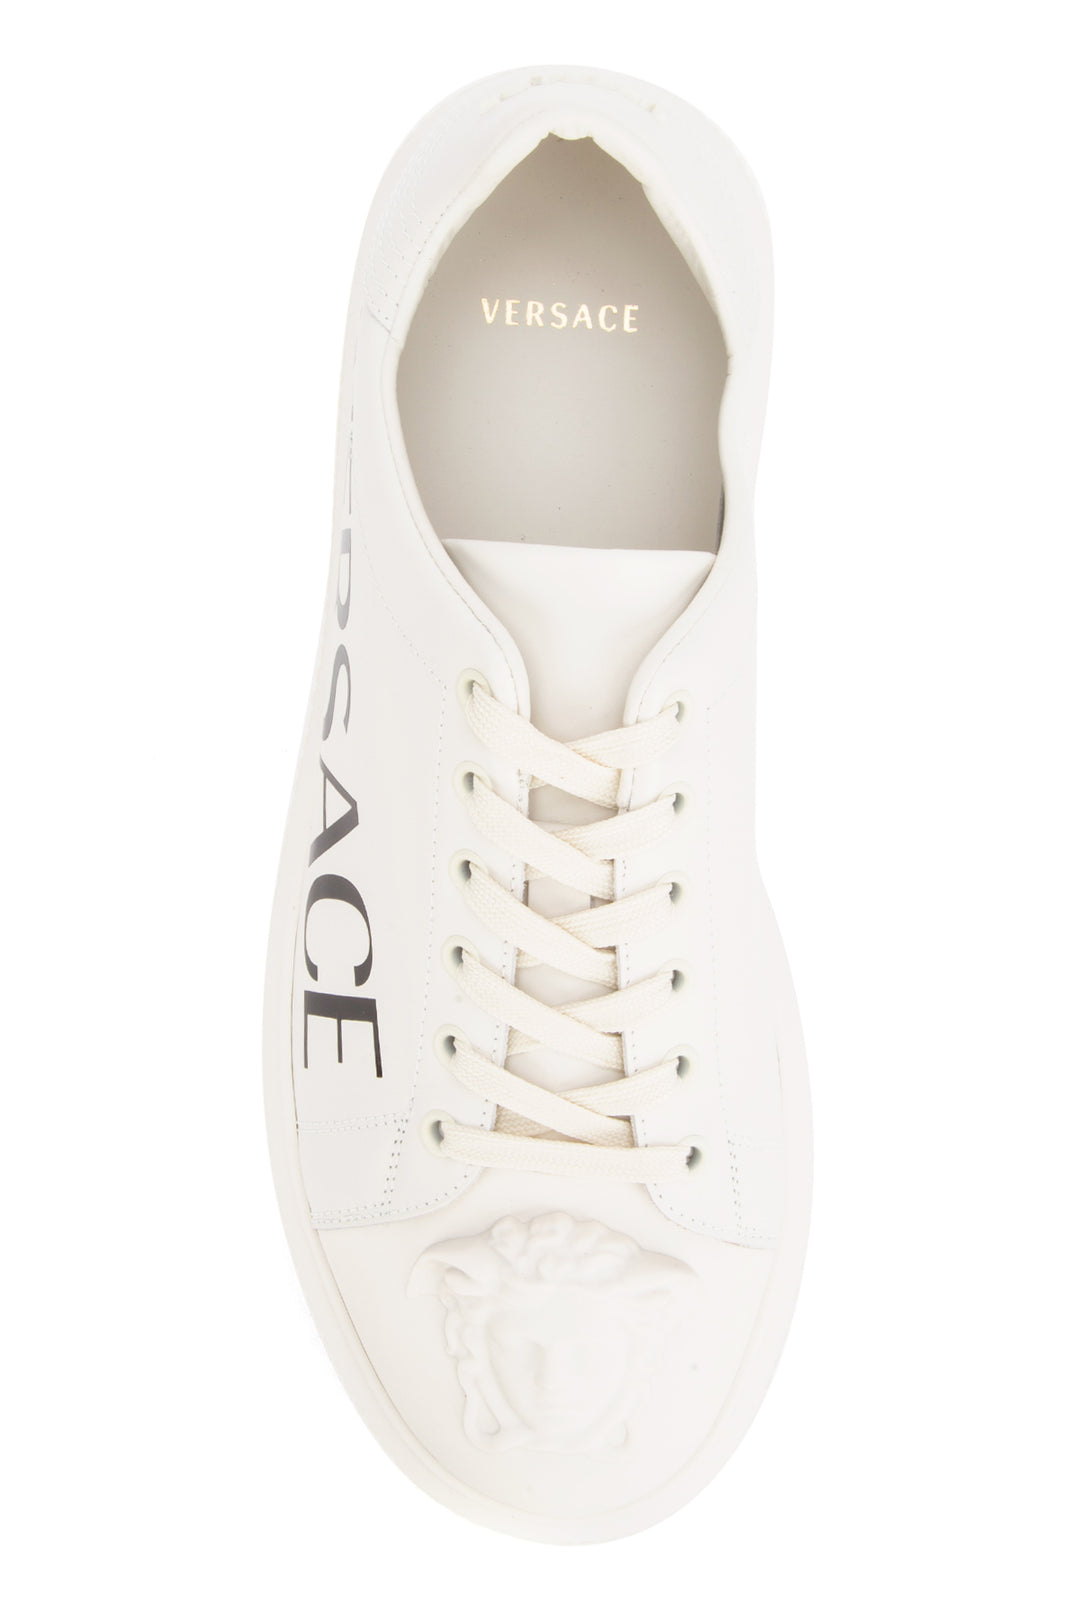 Sneakers con logo-Versace-Wanan Luxury